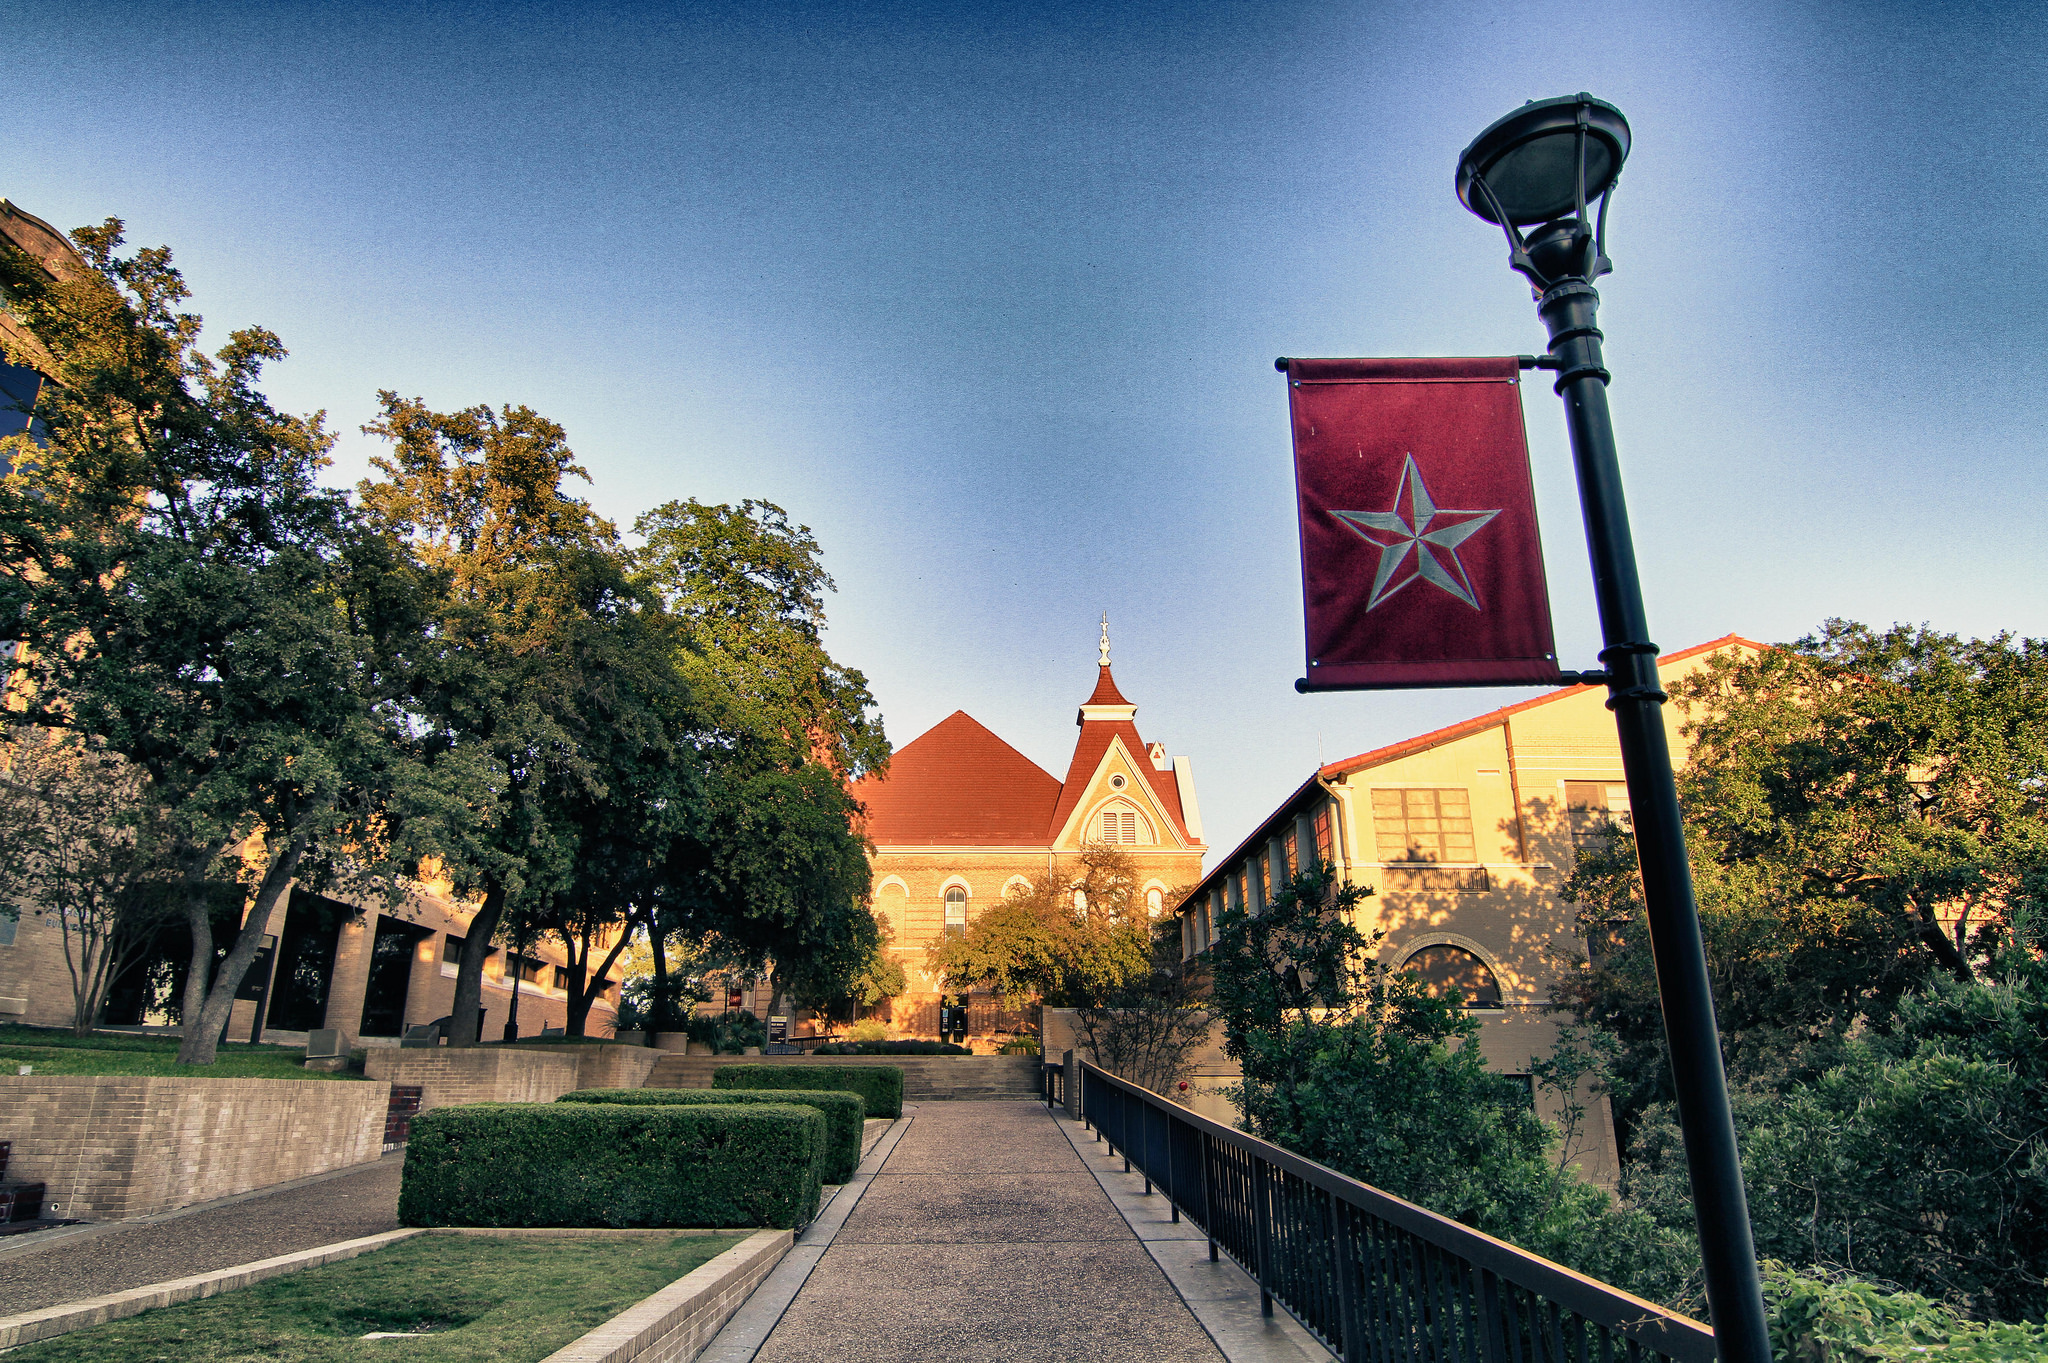 Texas State University campus